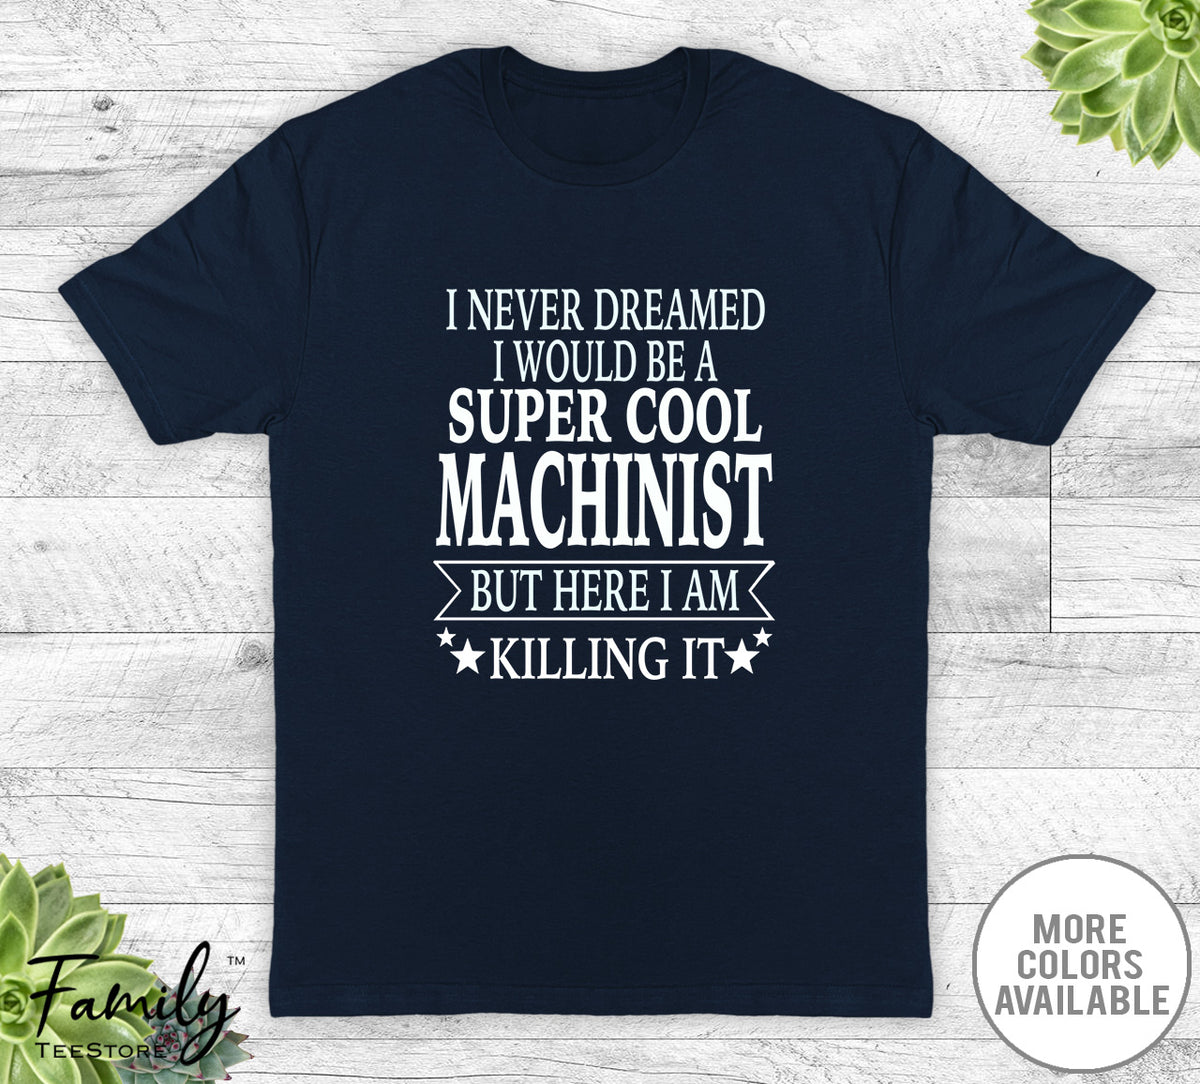 I Never Dreamed I'd Be A Super Cool Machinist - Unisex T-shirt - Machinist Shirt - Machinist Gift